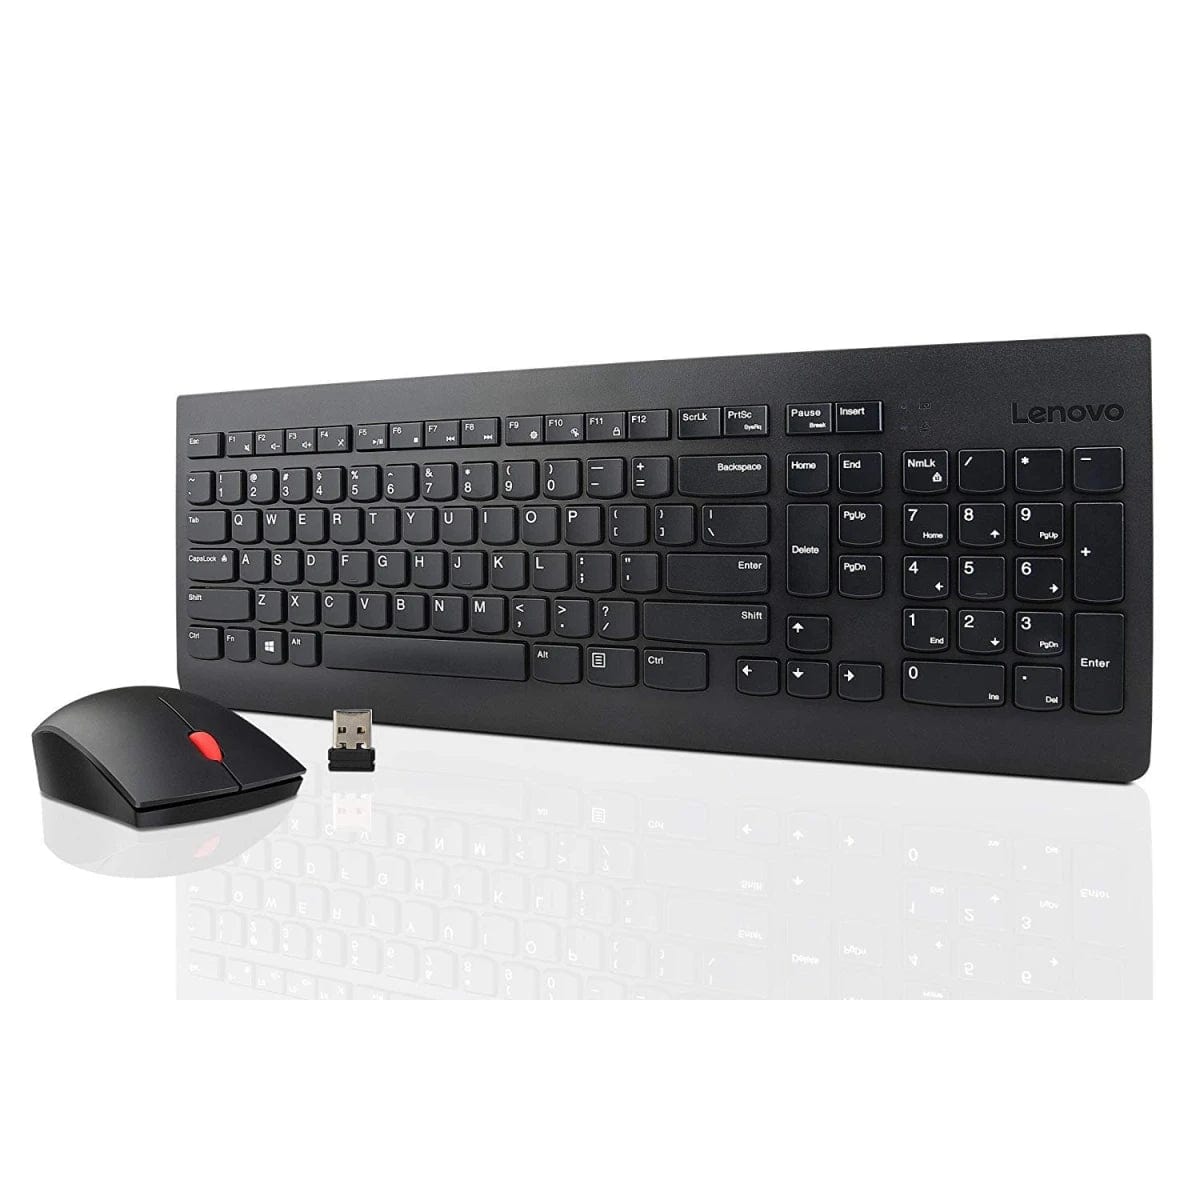 LENOVO OFFICE KEYBOARD Lenovo 510 Wireless Keyboard & Mouse Combo Full Size Island Key Design Left or Right Hand Optical Mouse Arabic / English - Black